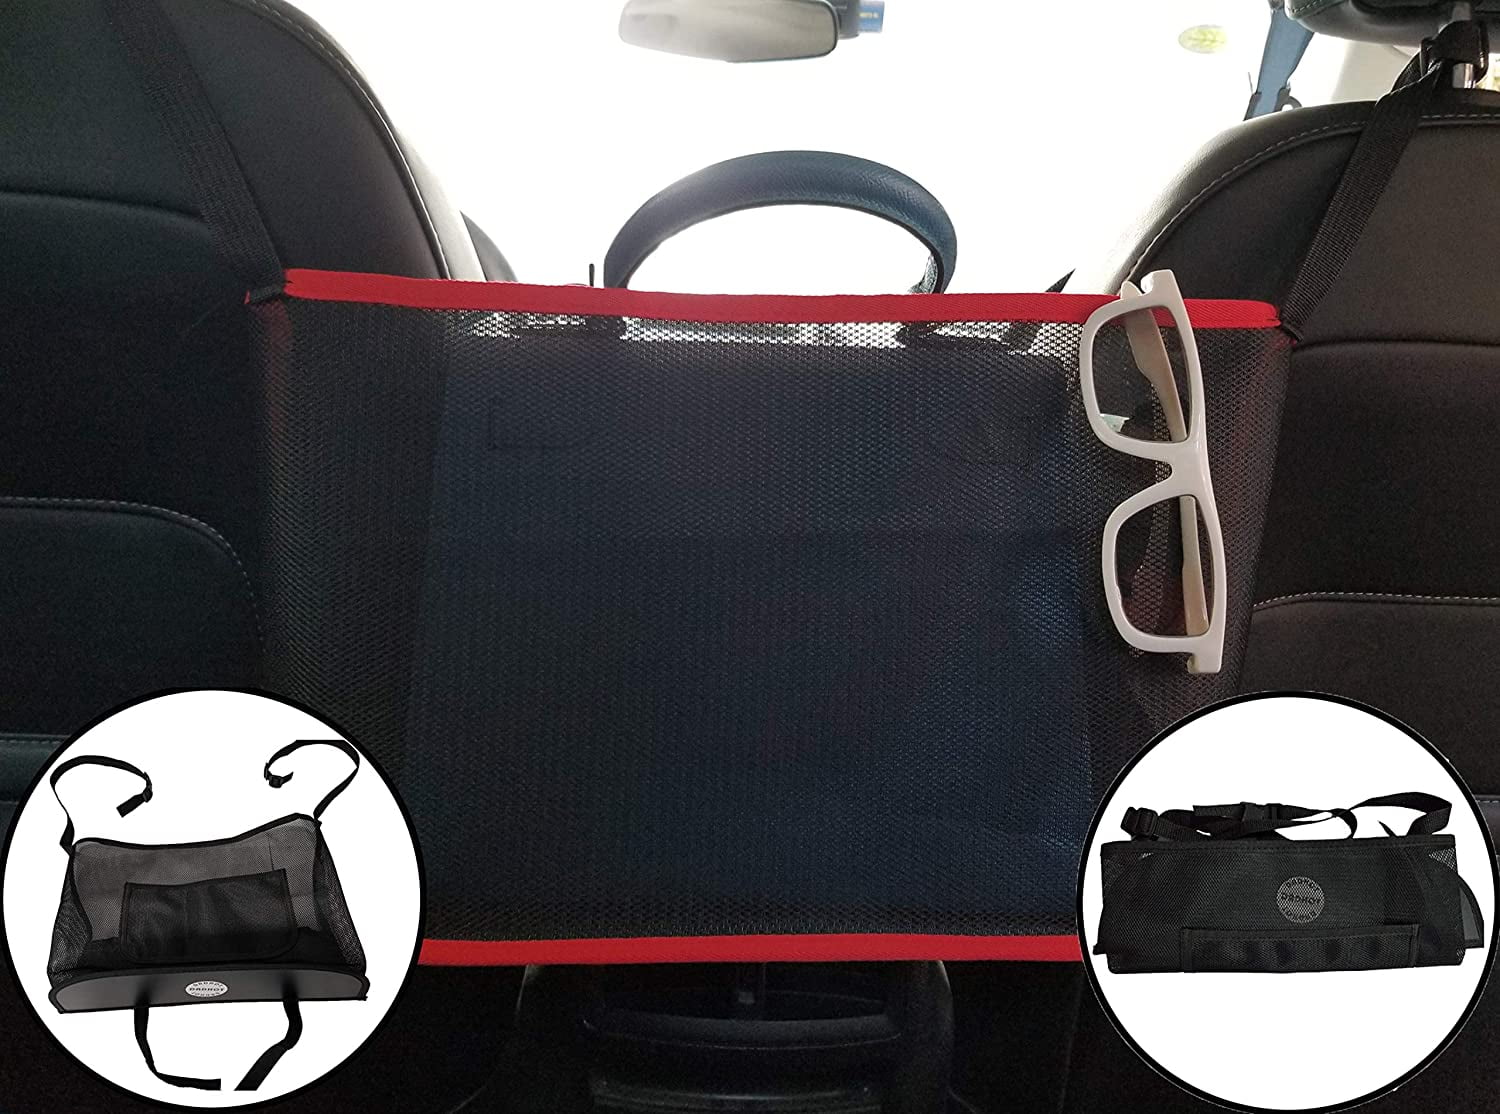 IJJ Car Net Pocket Handbag Holder,Car Purse Holder Between Seats,Car Seat Organizer,Seat Storage Netting Bag Car Accessories 